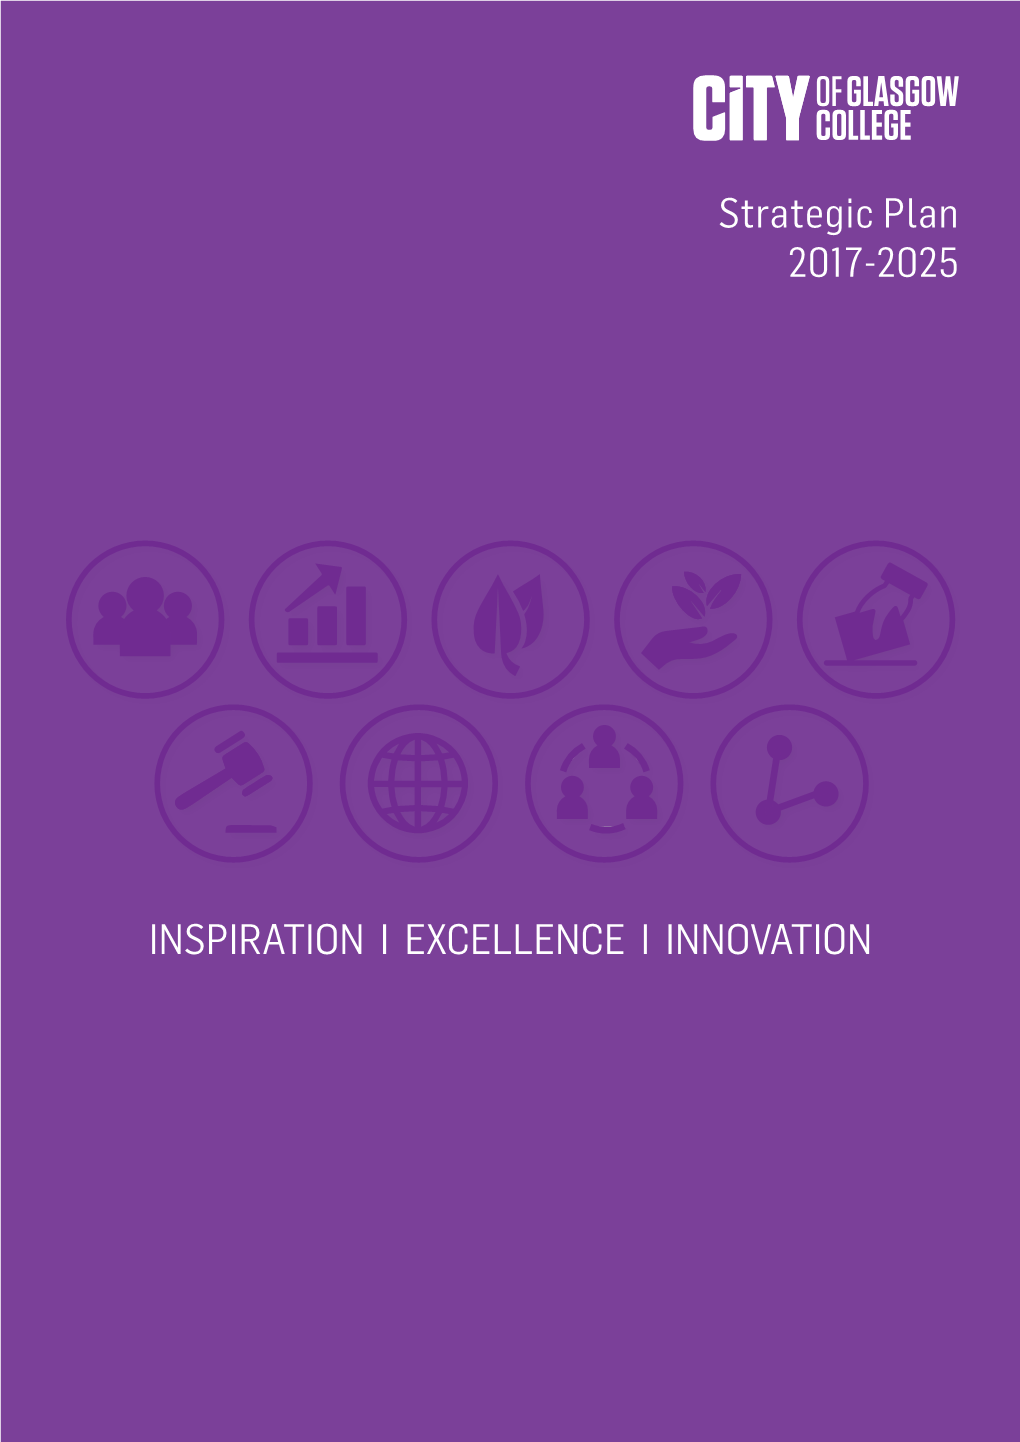 City of Glasgow College Strategic Plan 2017-2025